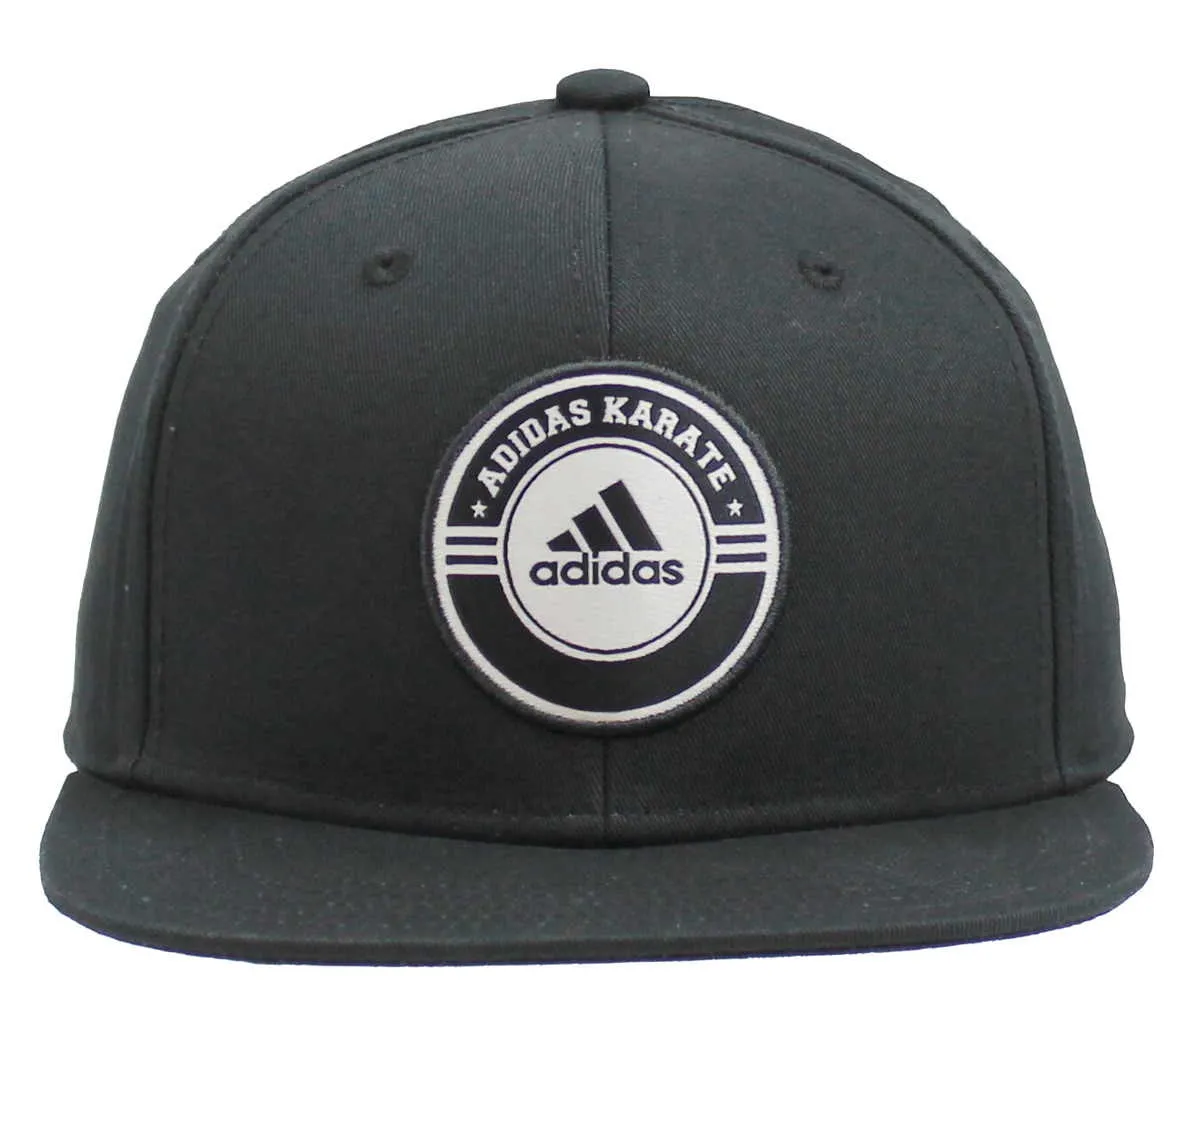 adidas Snap Back Cap Combat Karate black